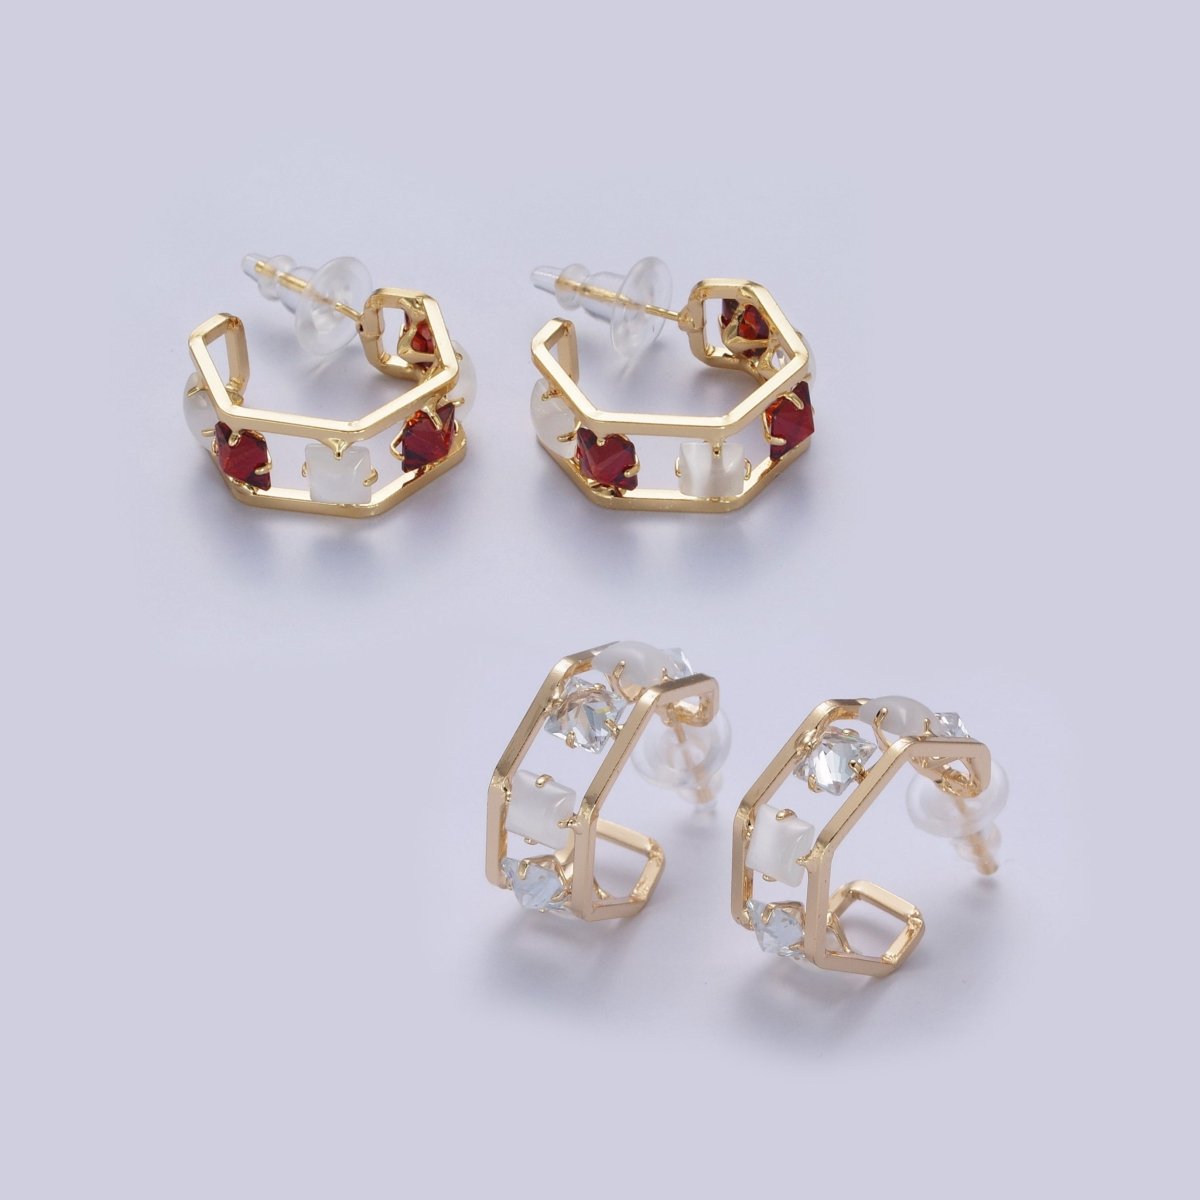 24K Gold Filled Hexagonal Double Band C Shaped Baguette Cubic Zirconia CZ Stud Earrings P-306 P-307 - DLUXCA